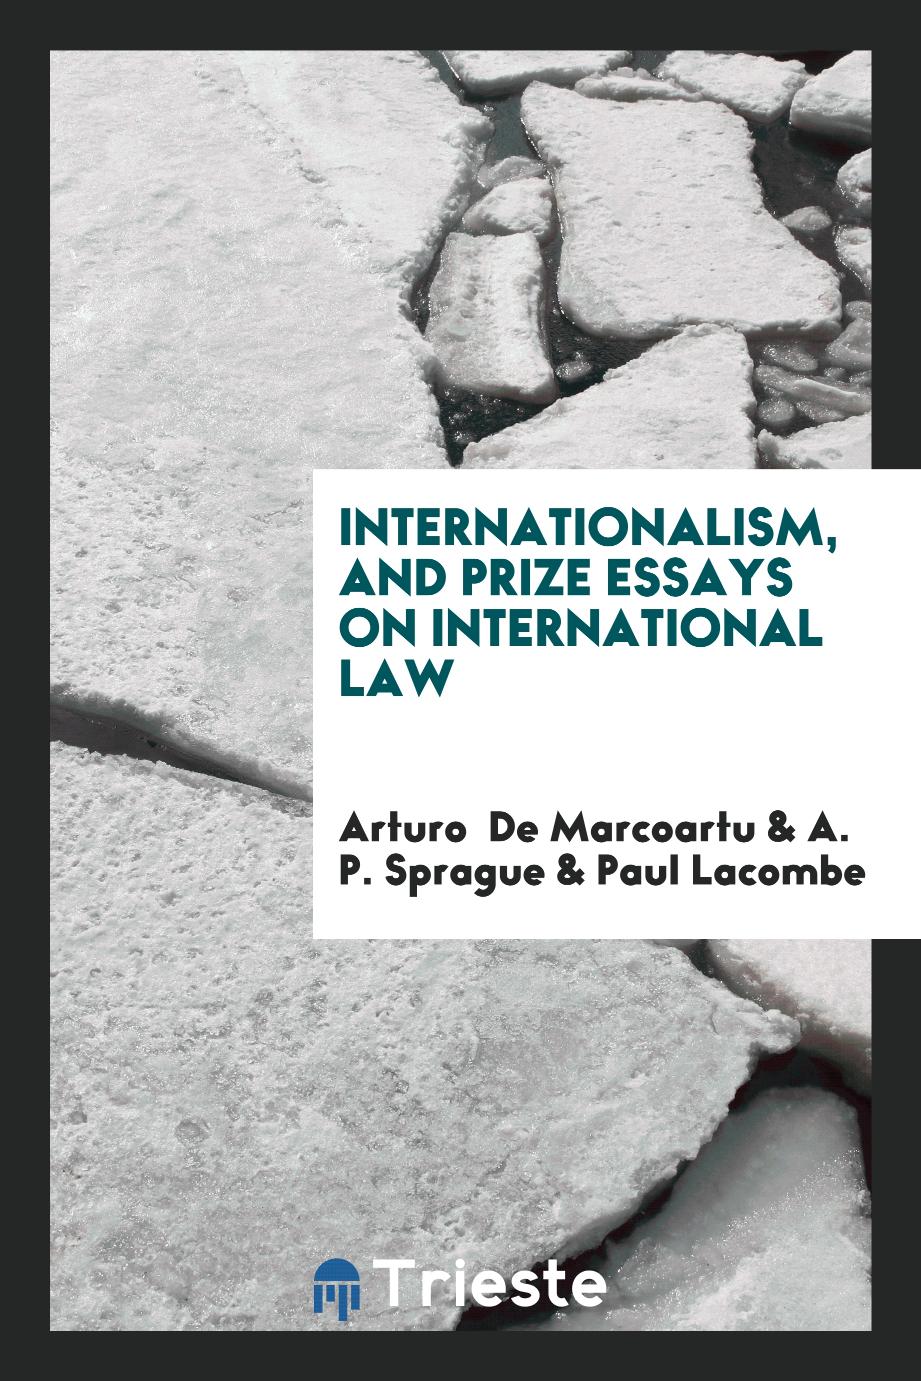 Internationalism, and prize essays on international law